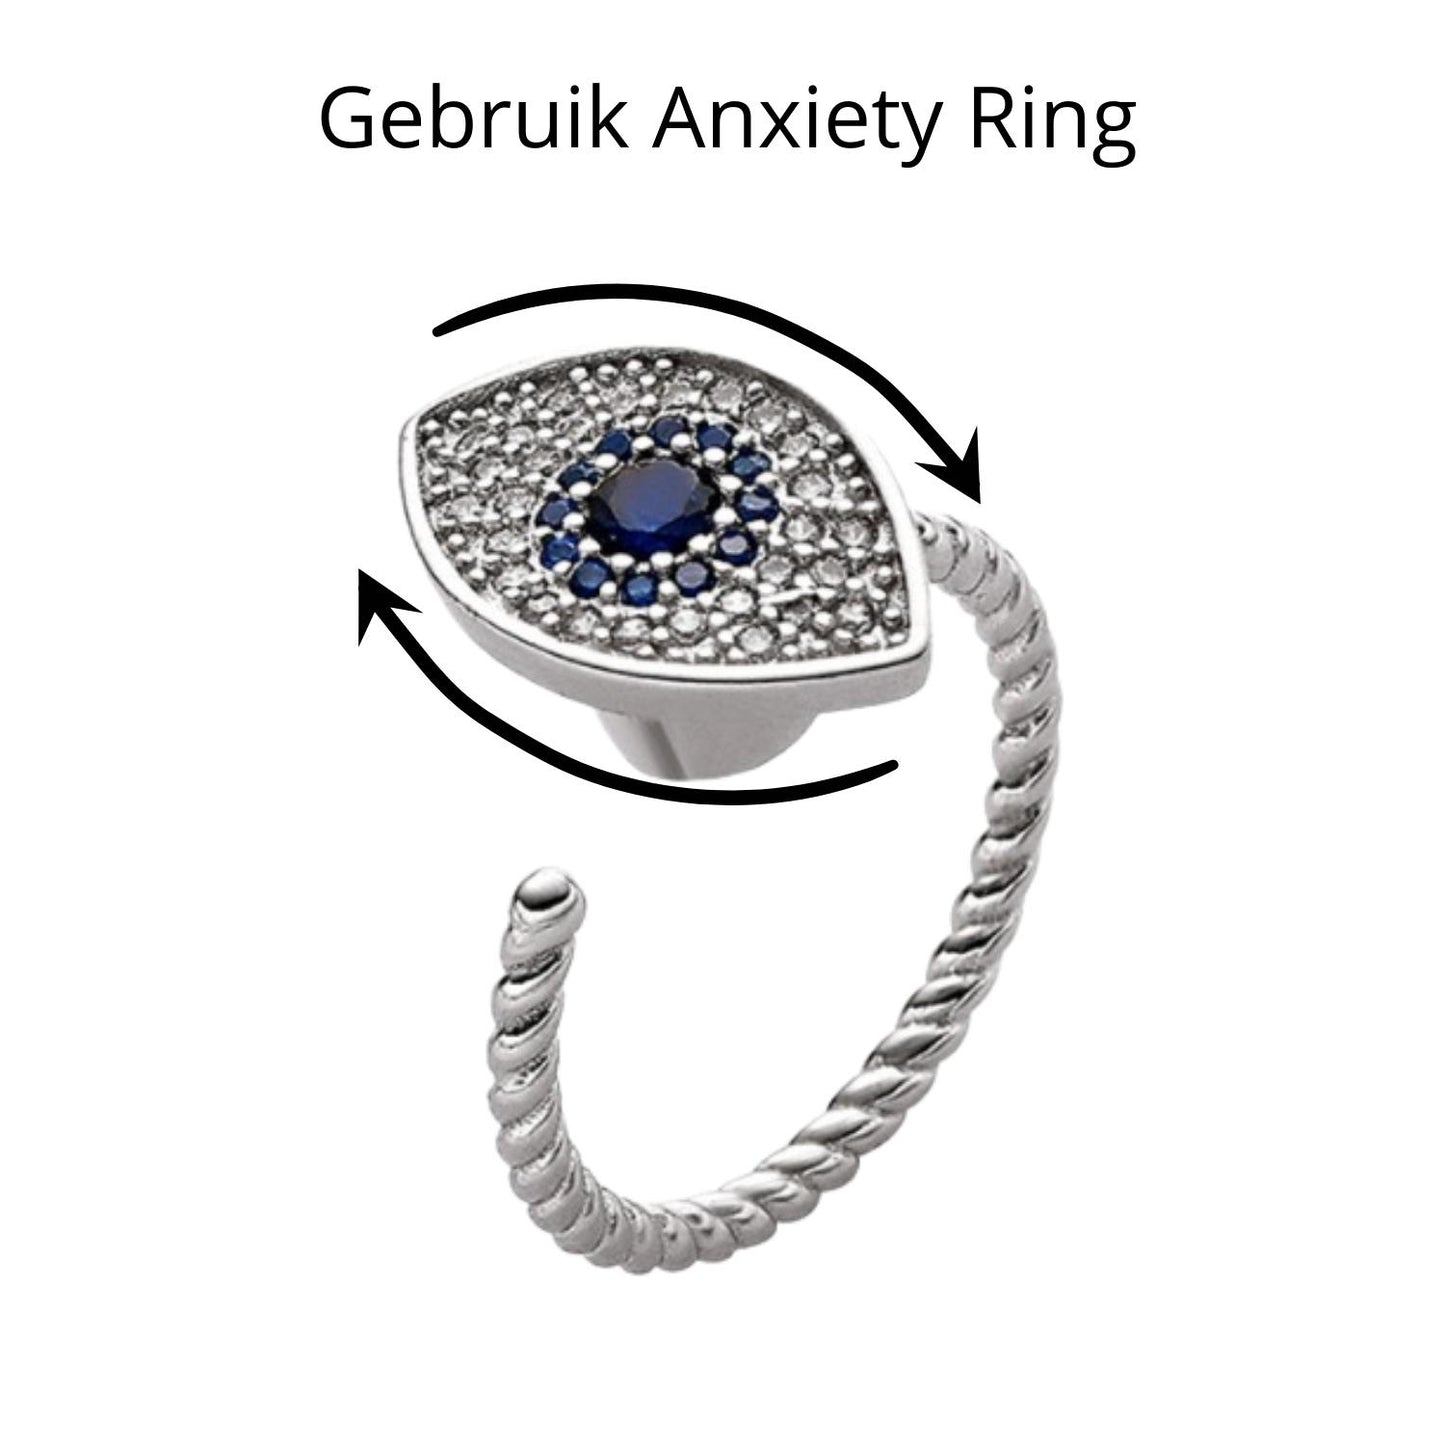 Anxiety ring (eye) silver 925